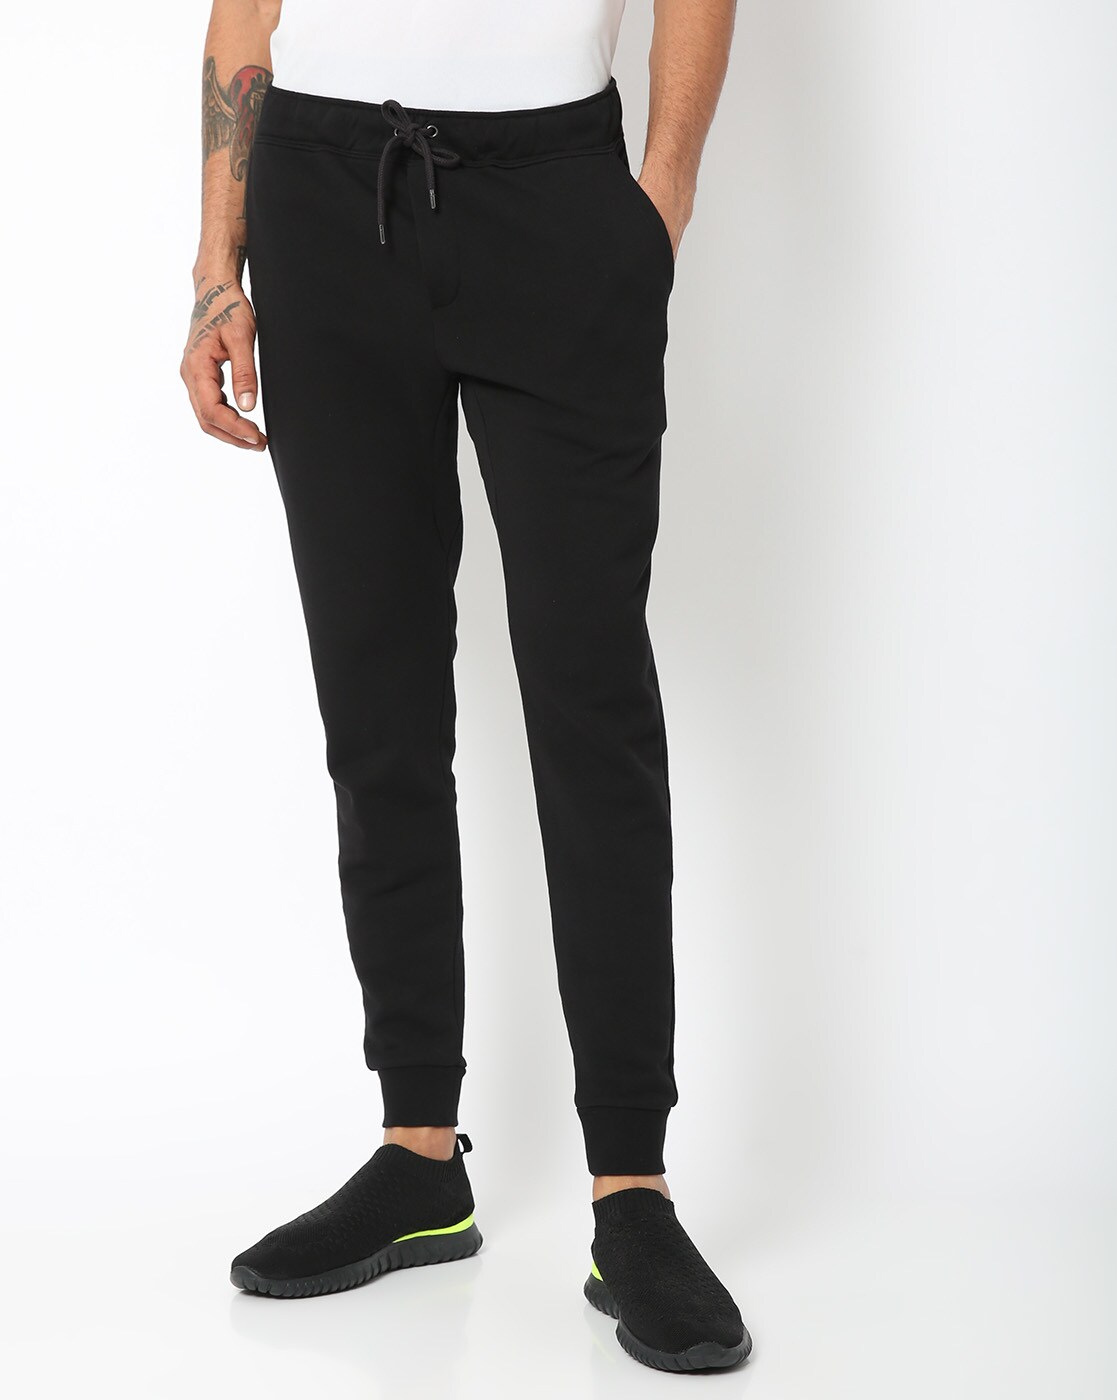 Buy Black Trousers  Pants for Men by DENNISLINGO PREMIUM ATTIRE Online   Ajiocom